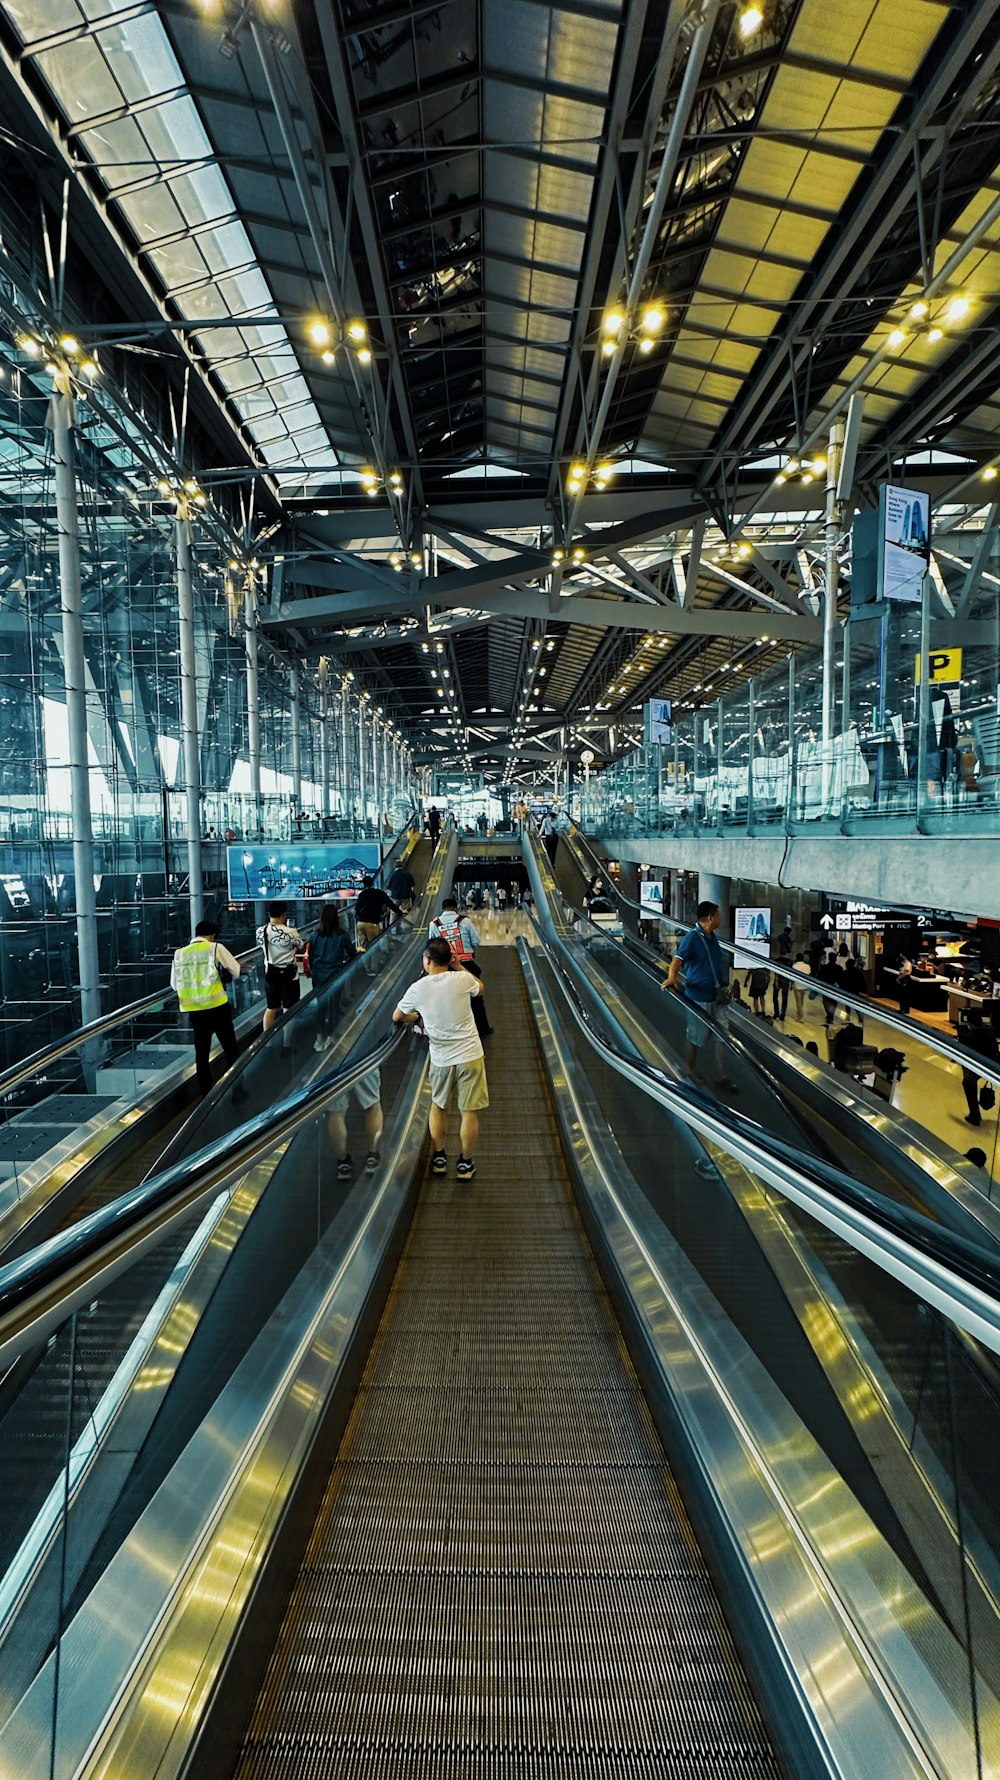 a person riding an escalator at an airport